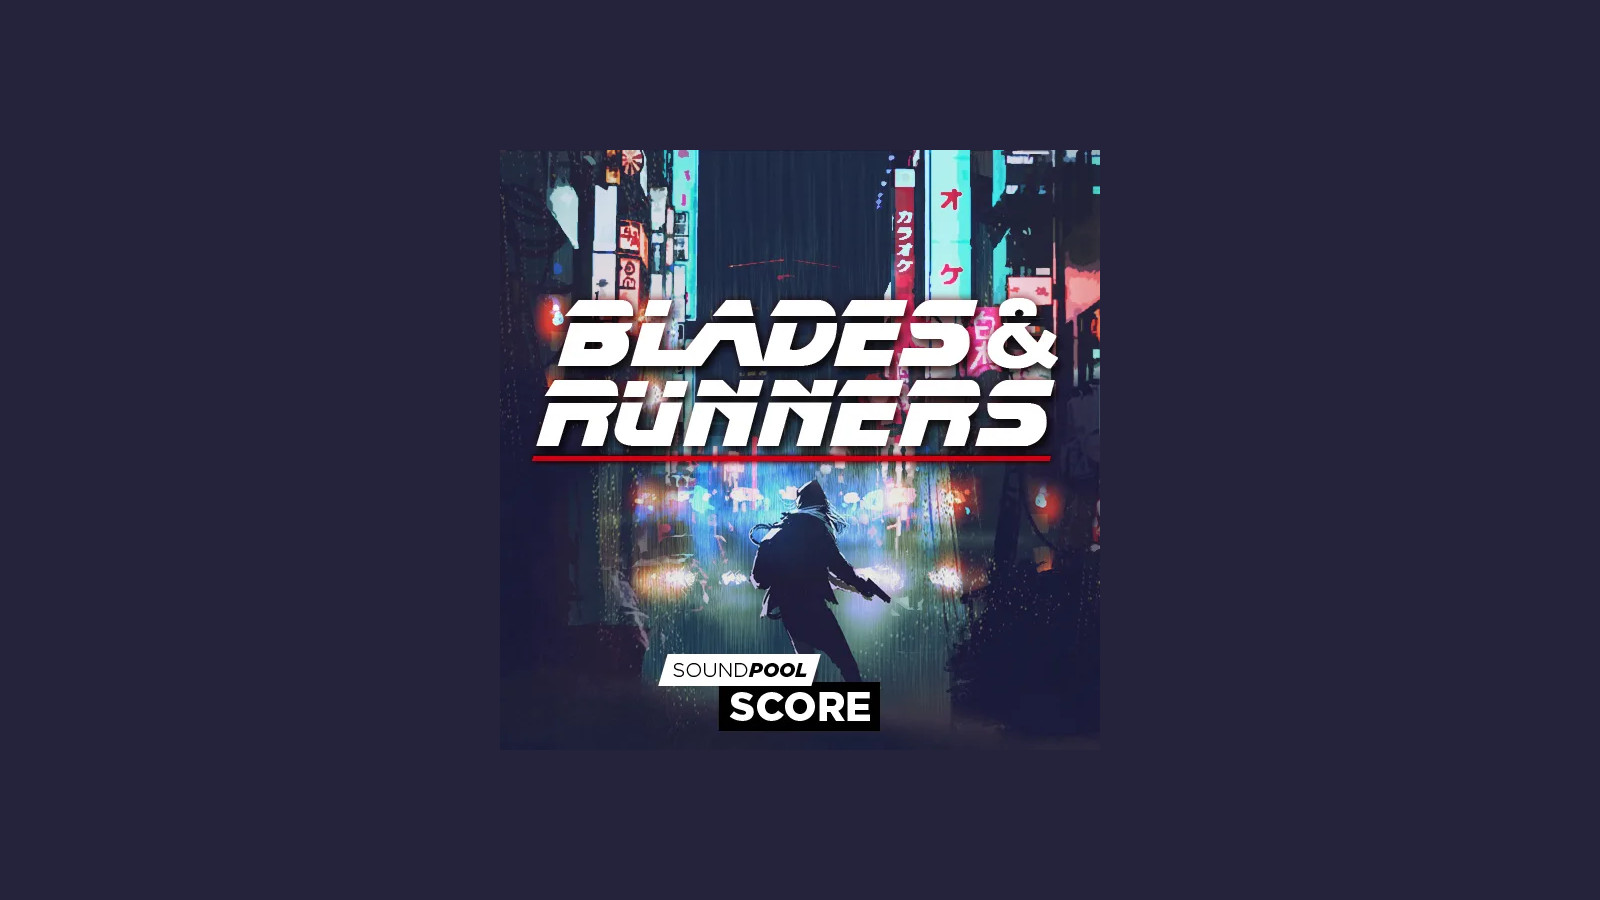 (5.65$) MAGIX Soundpool Blades & Runners ProducerPlanet CD Key